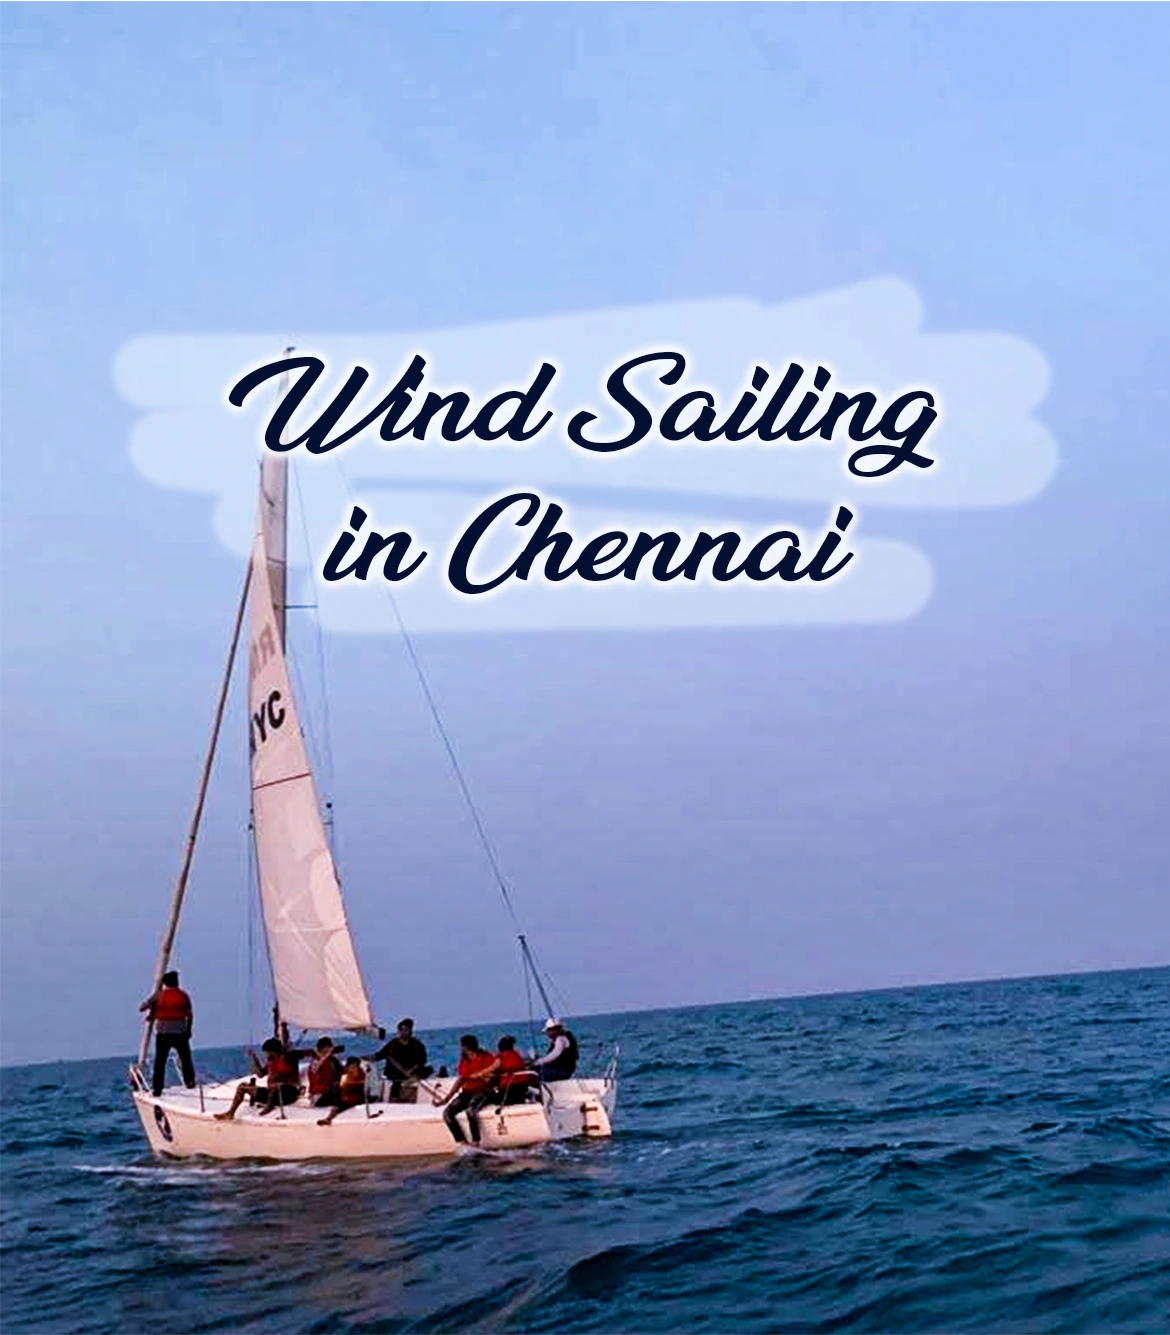 Wind Sailing in Chennai